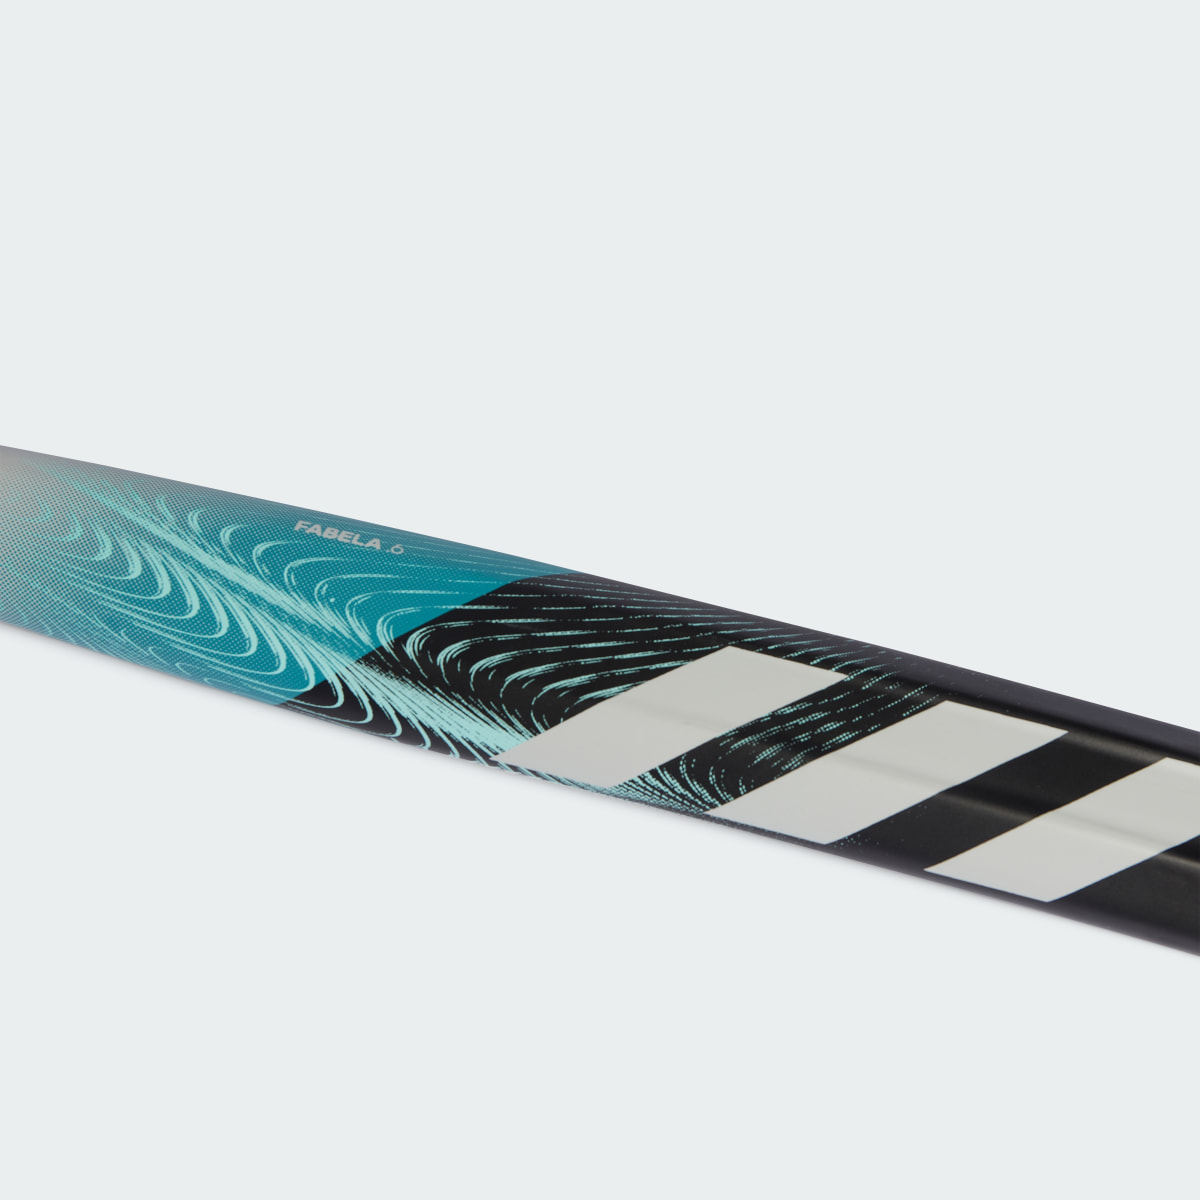 Adidas Fabela 92 cm Field Hockey Stick. 5